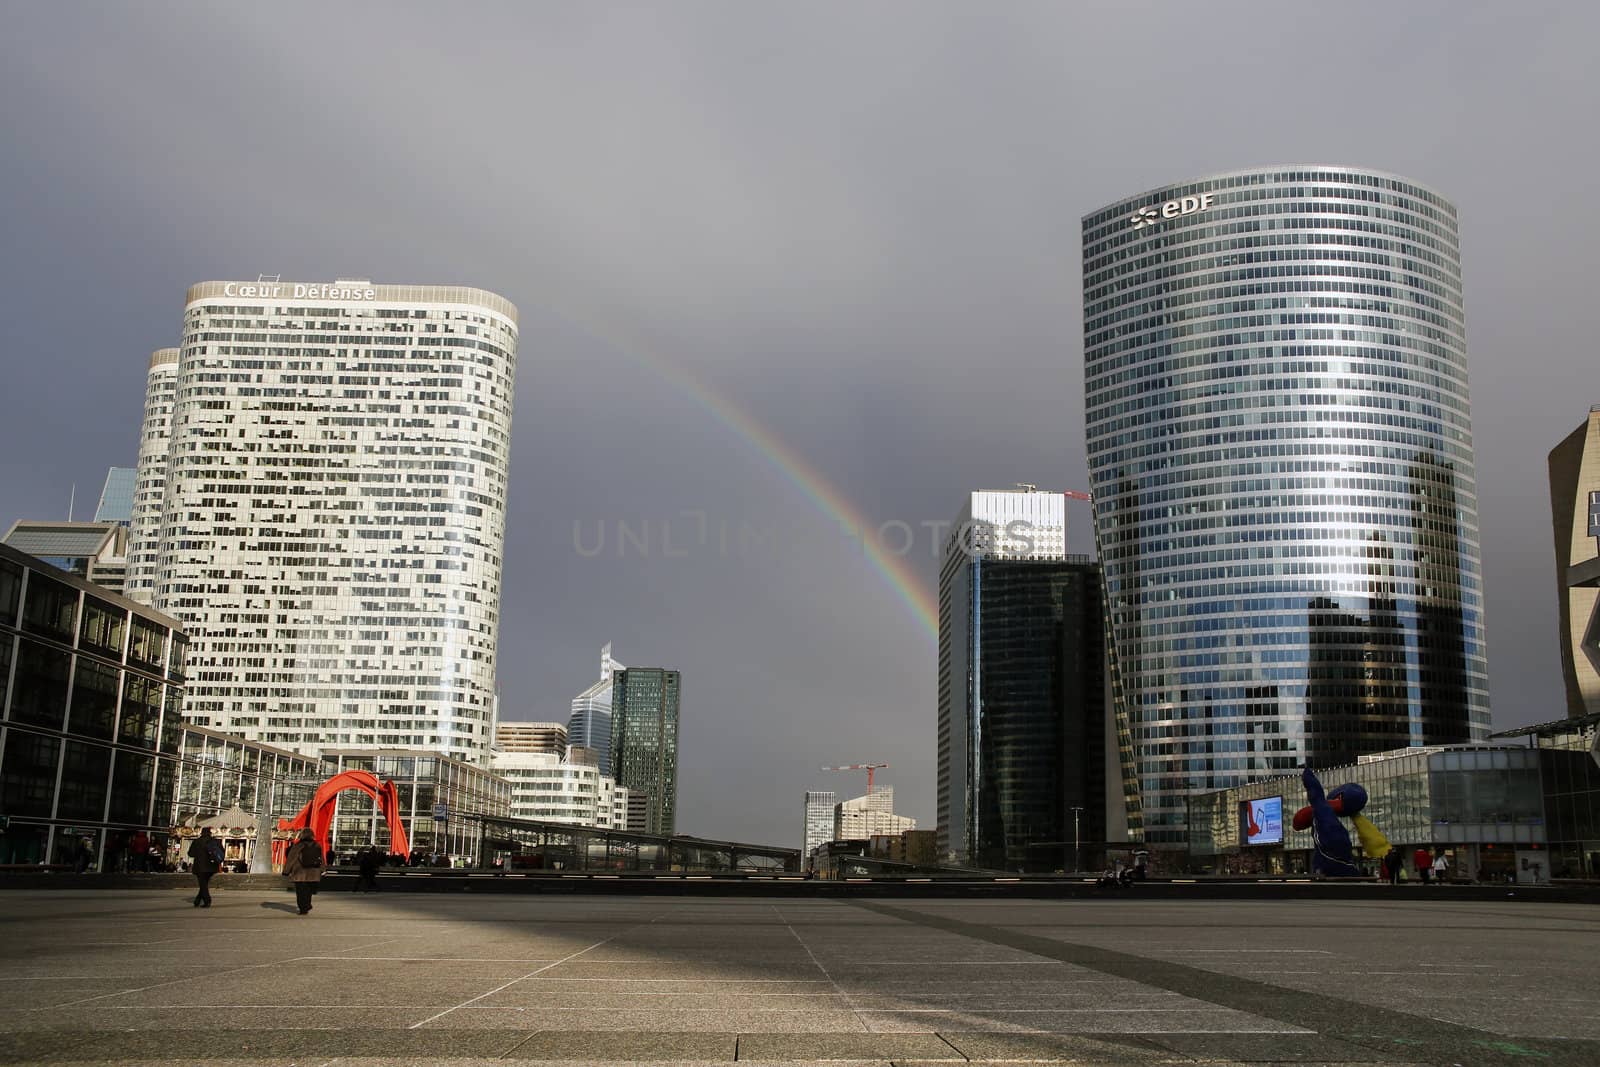 Rainbow under the city by macintox